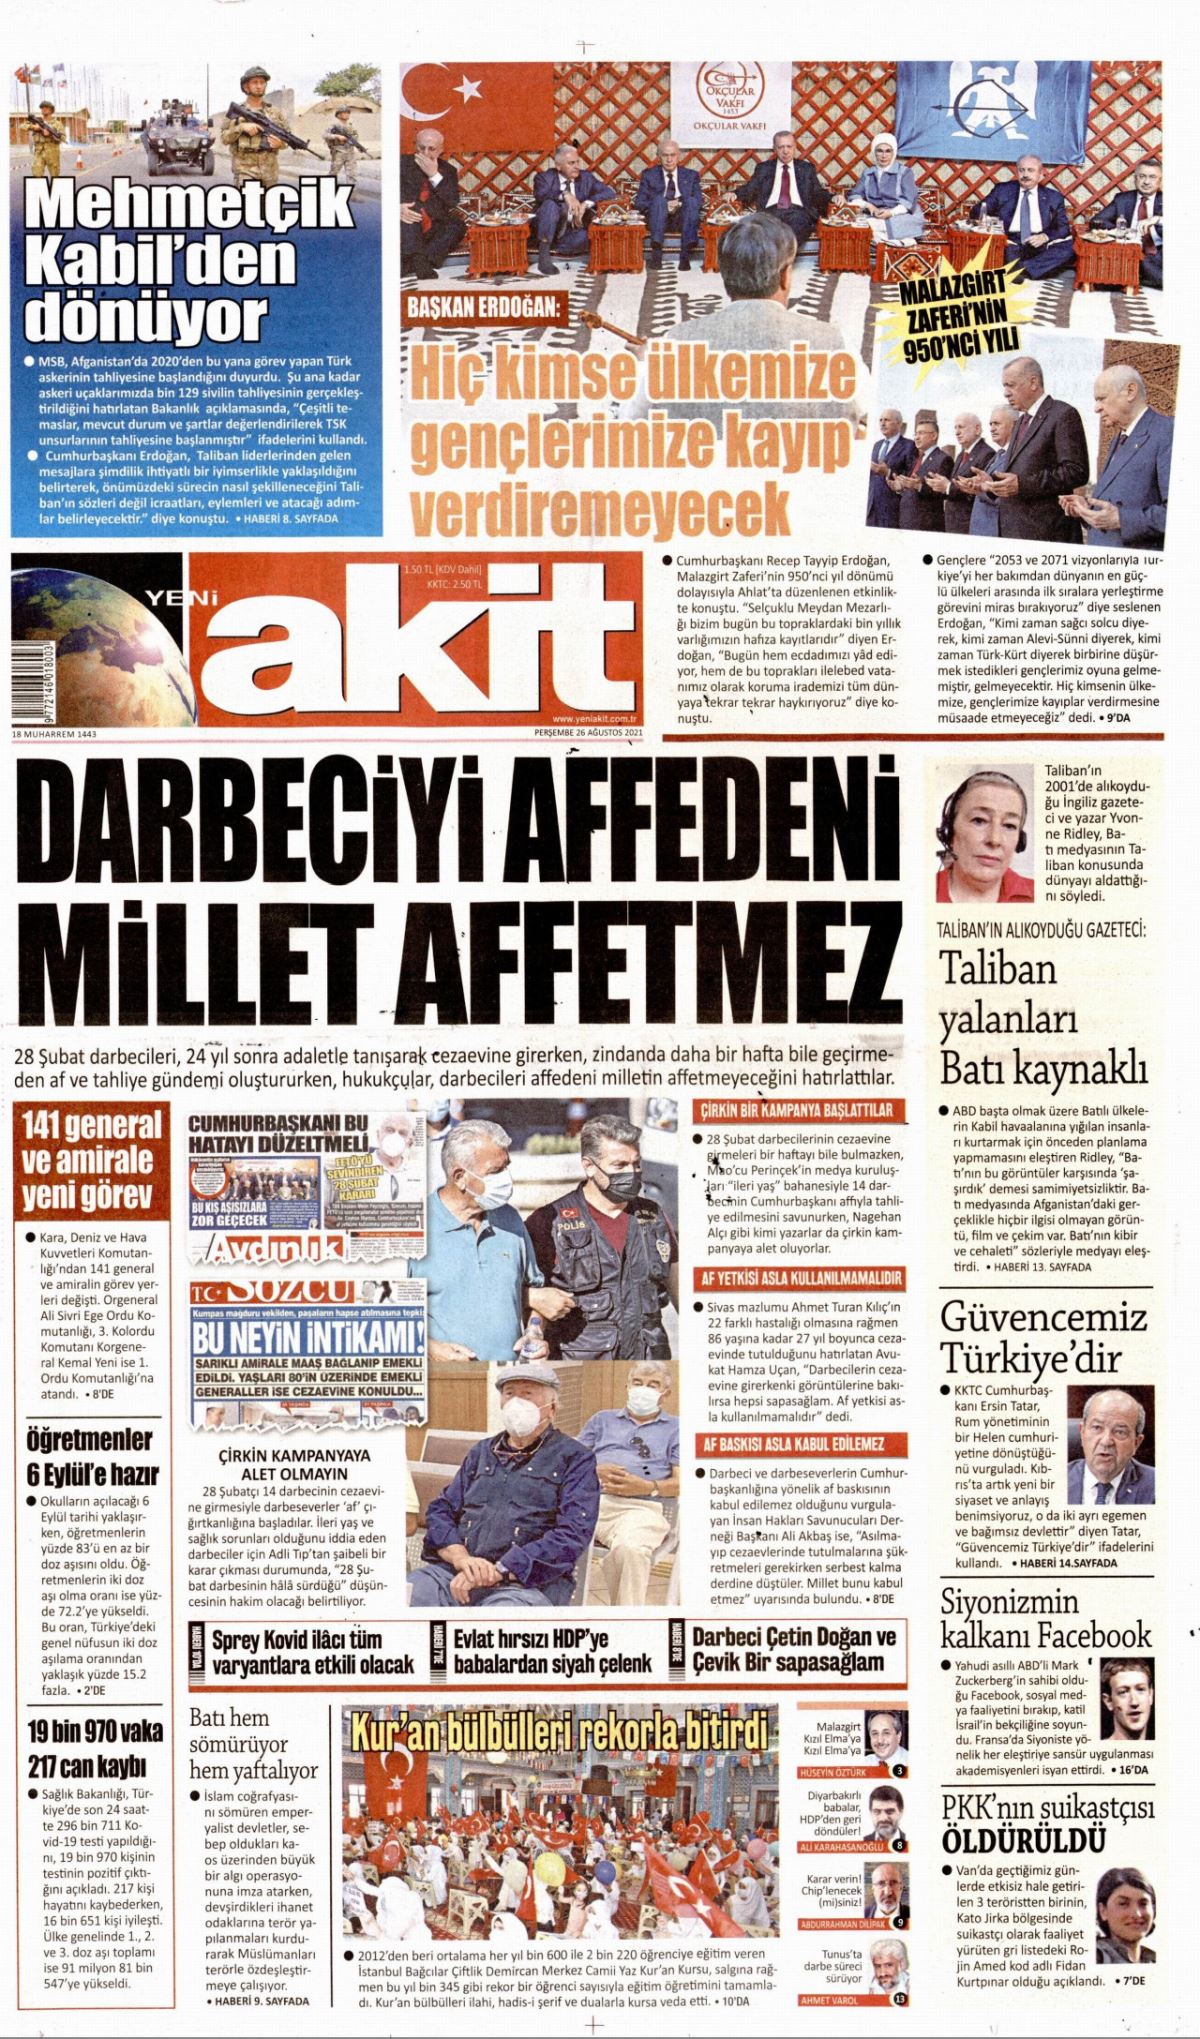 Yeni Akit'ten Erdoğan'a bildiri: Darbeciyi affedeni millet affetmez